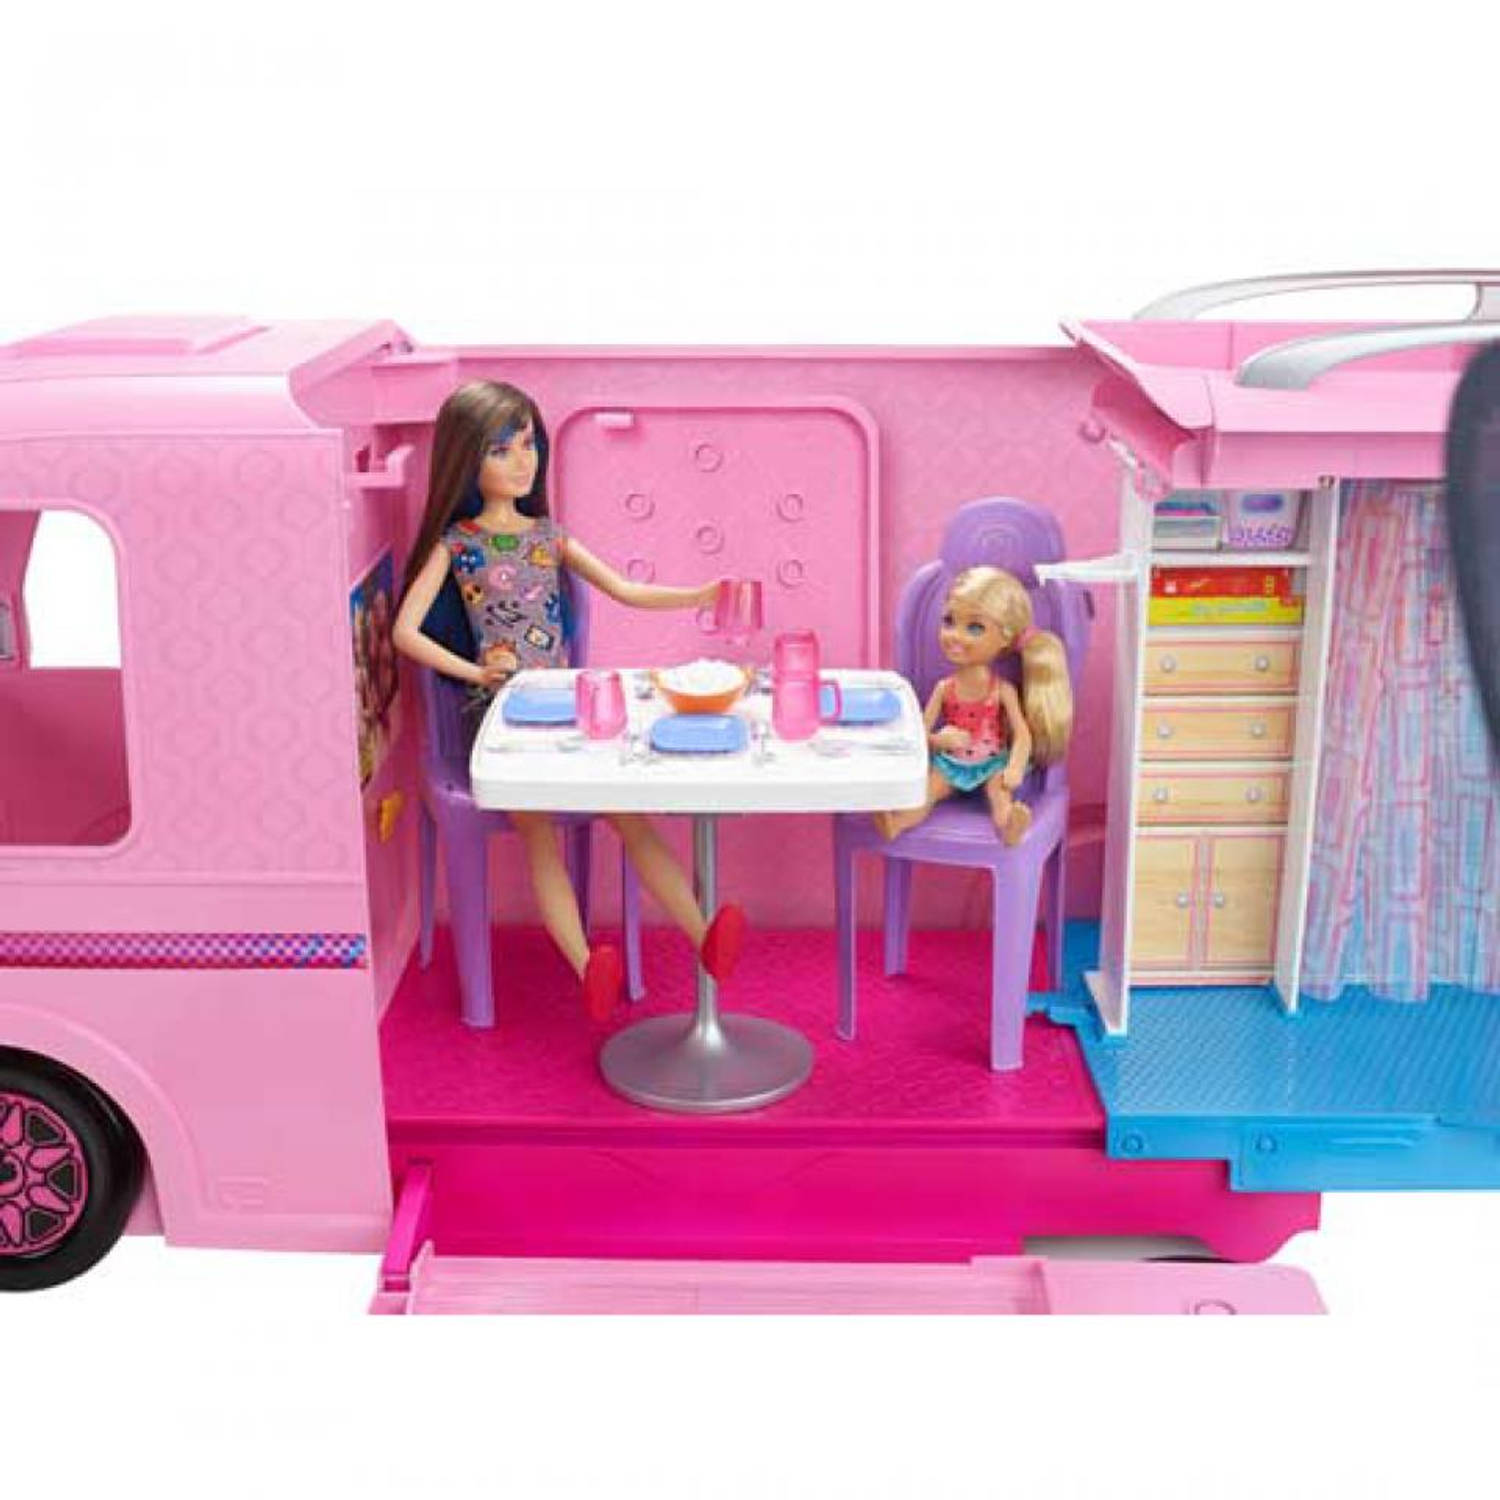 Flash vastleggen vermoeidheid Barbie Droomcamper speelset - roze | Blokker